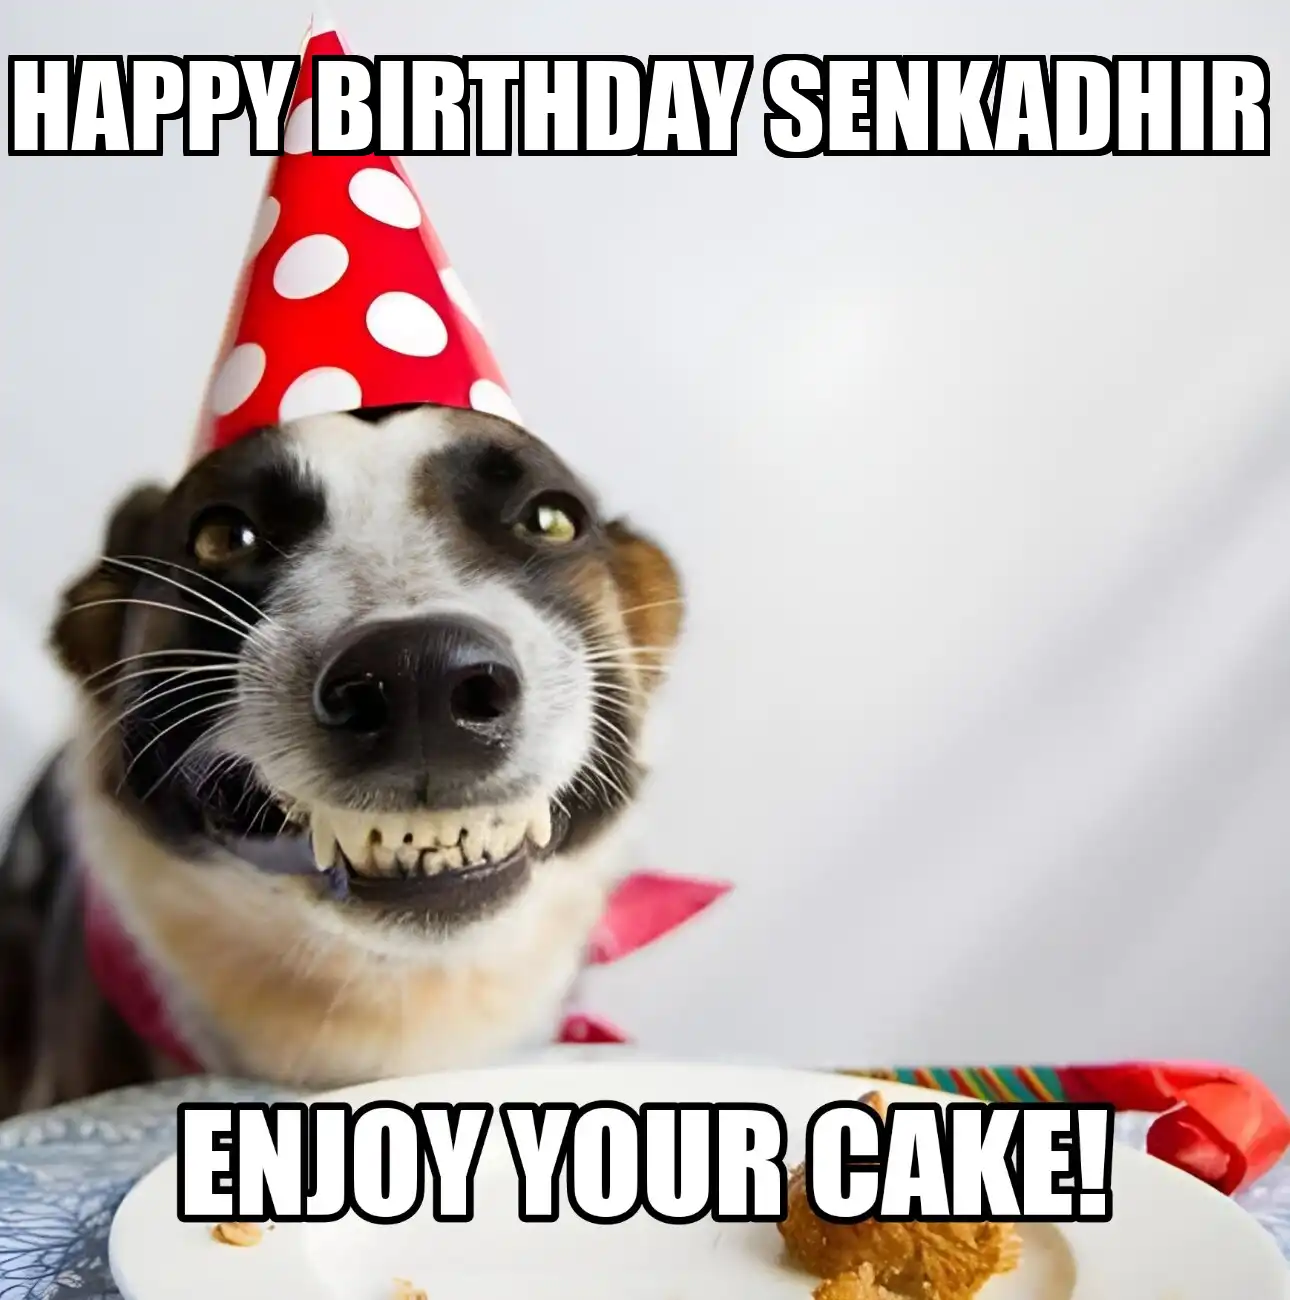 Happy Birthday Senkadhir Enjoy Your Cake Dog Meme